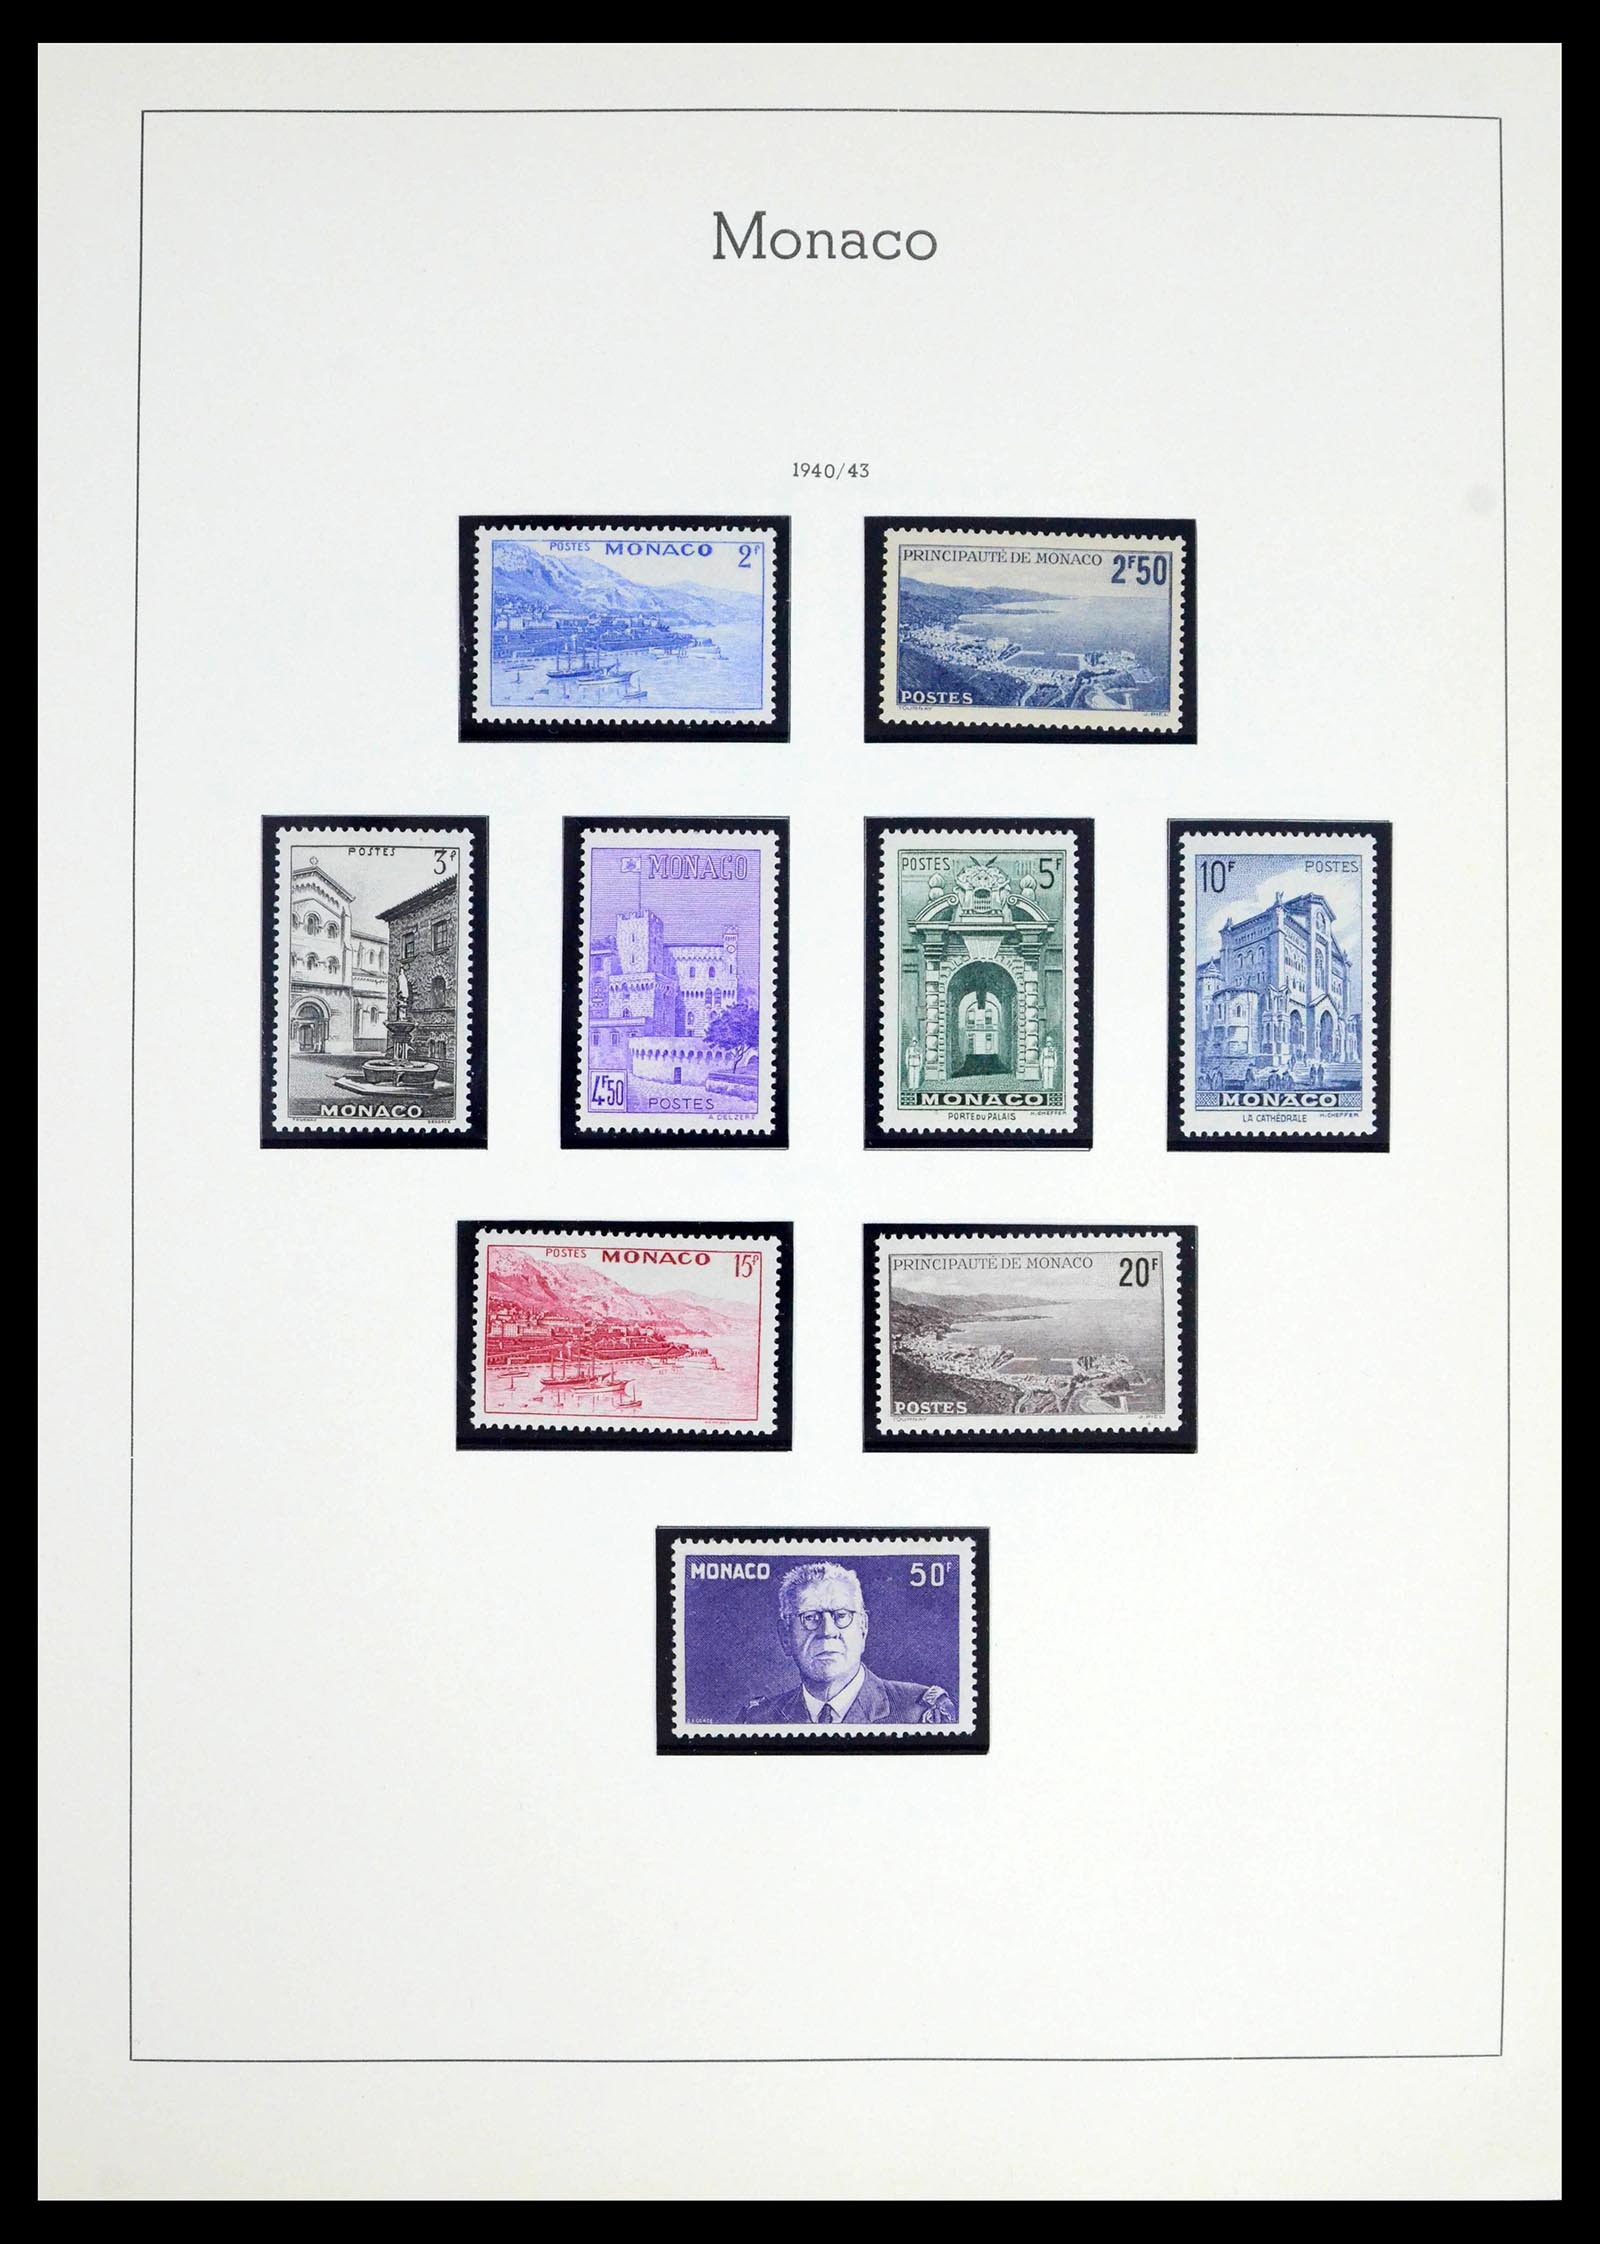 39392 0018 - Stamp collection 39392 Monaco 1885-1999.